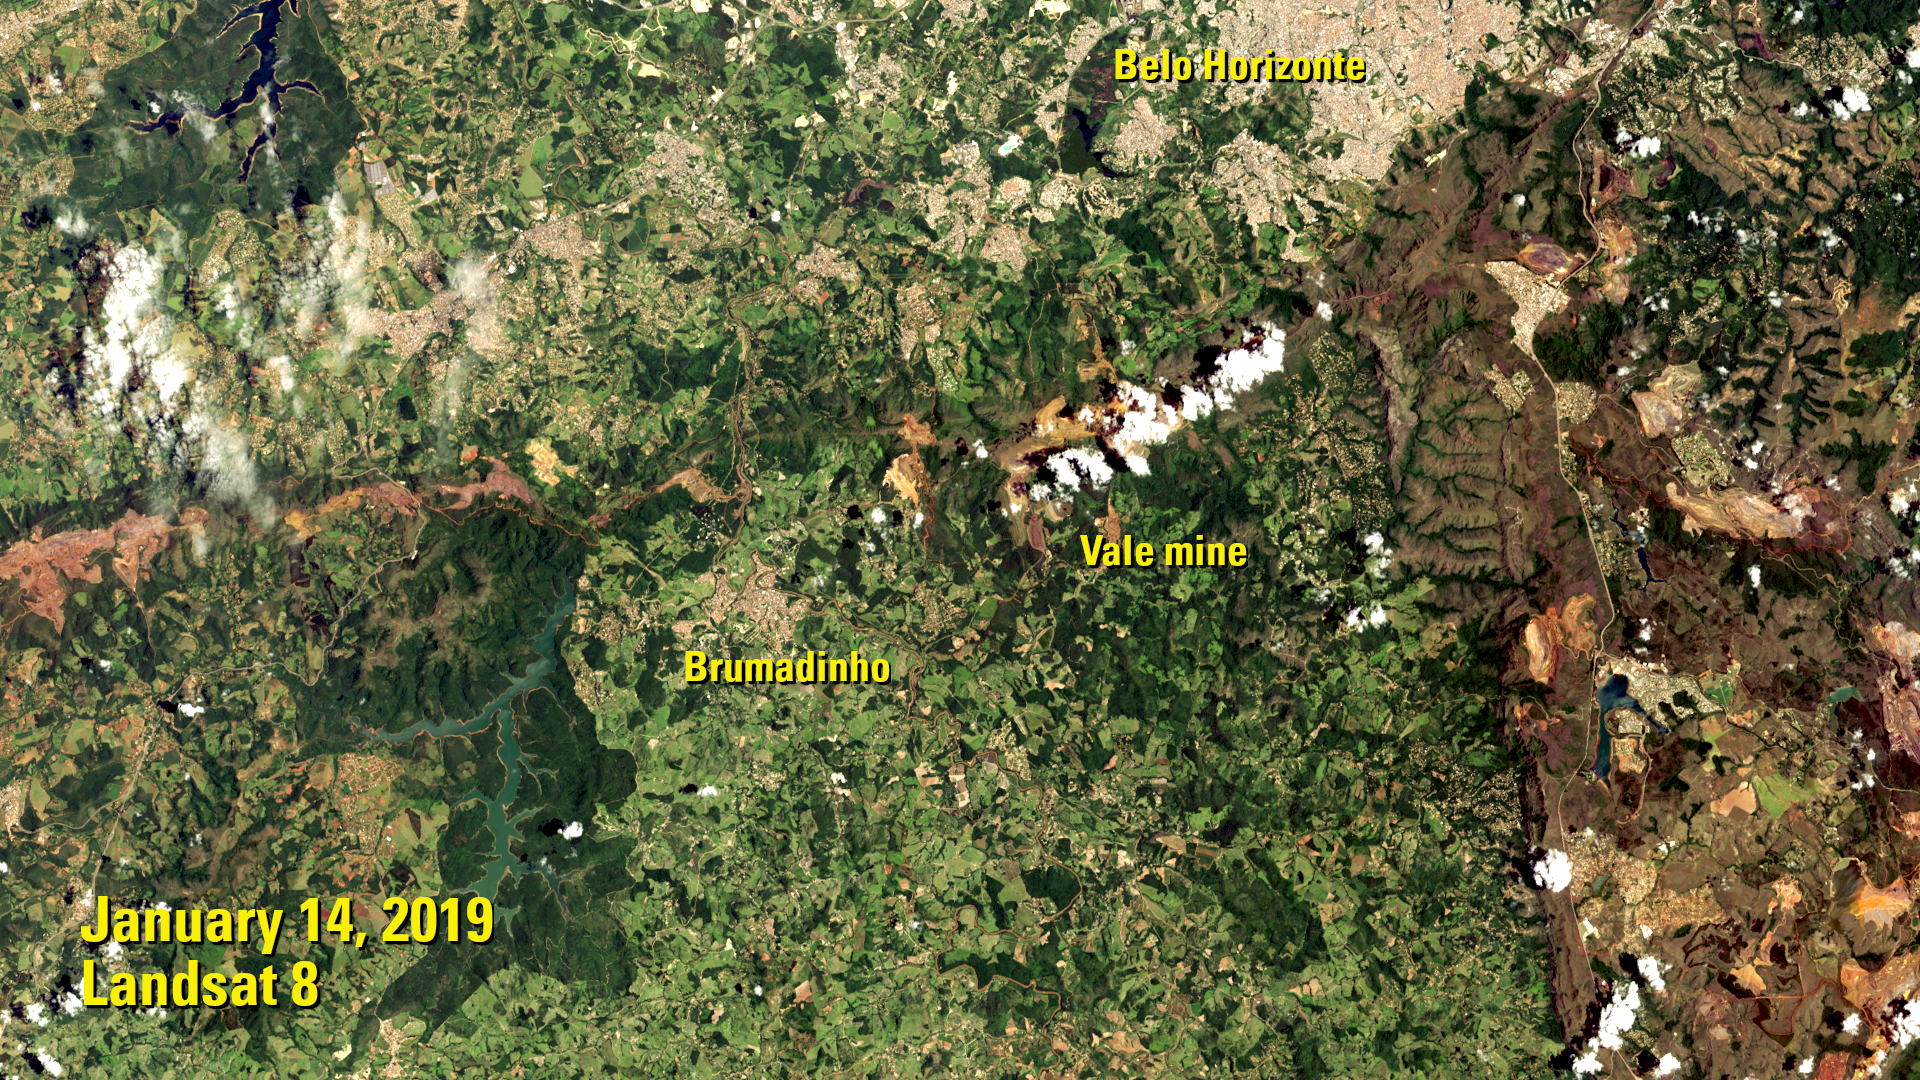 Landsat image of Minas Gerais, Brazil from January 14, 2019